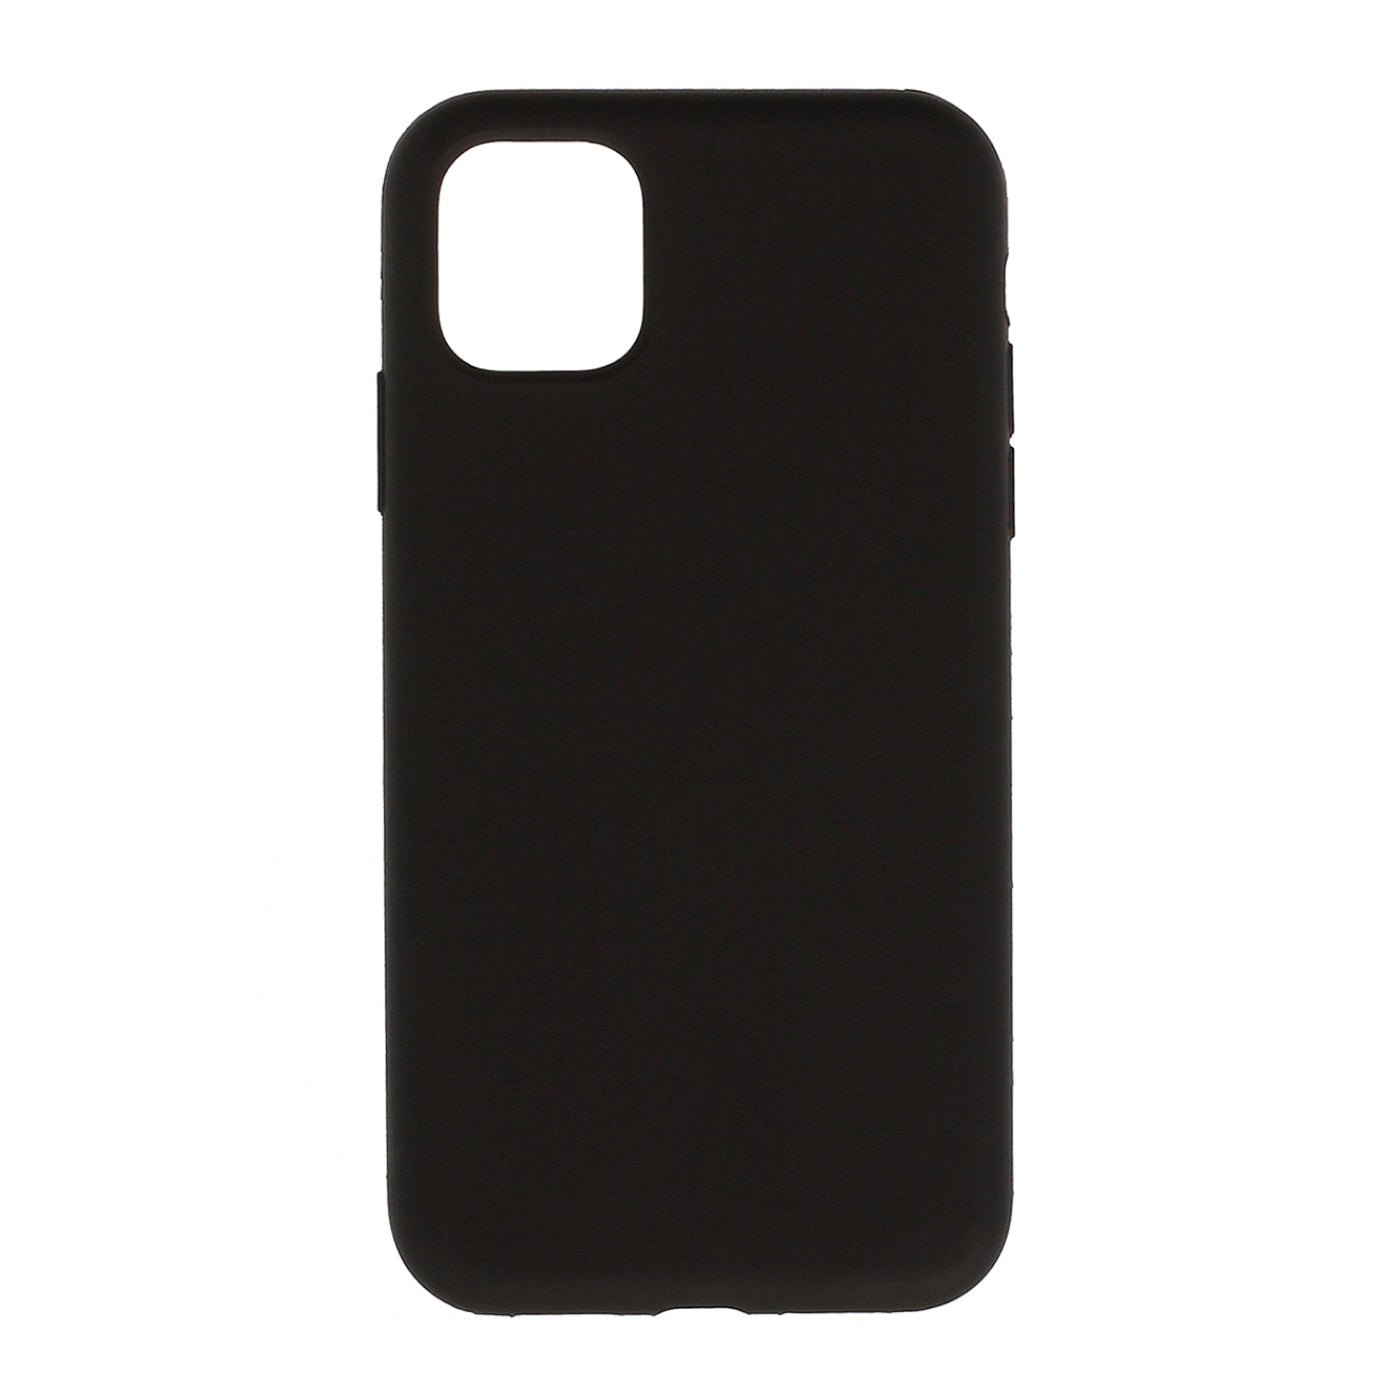 Liquid Phone Case - Black - Apple iPhone 11 Black New - Sealed